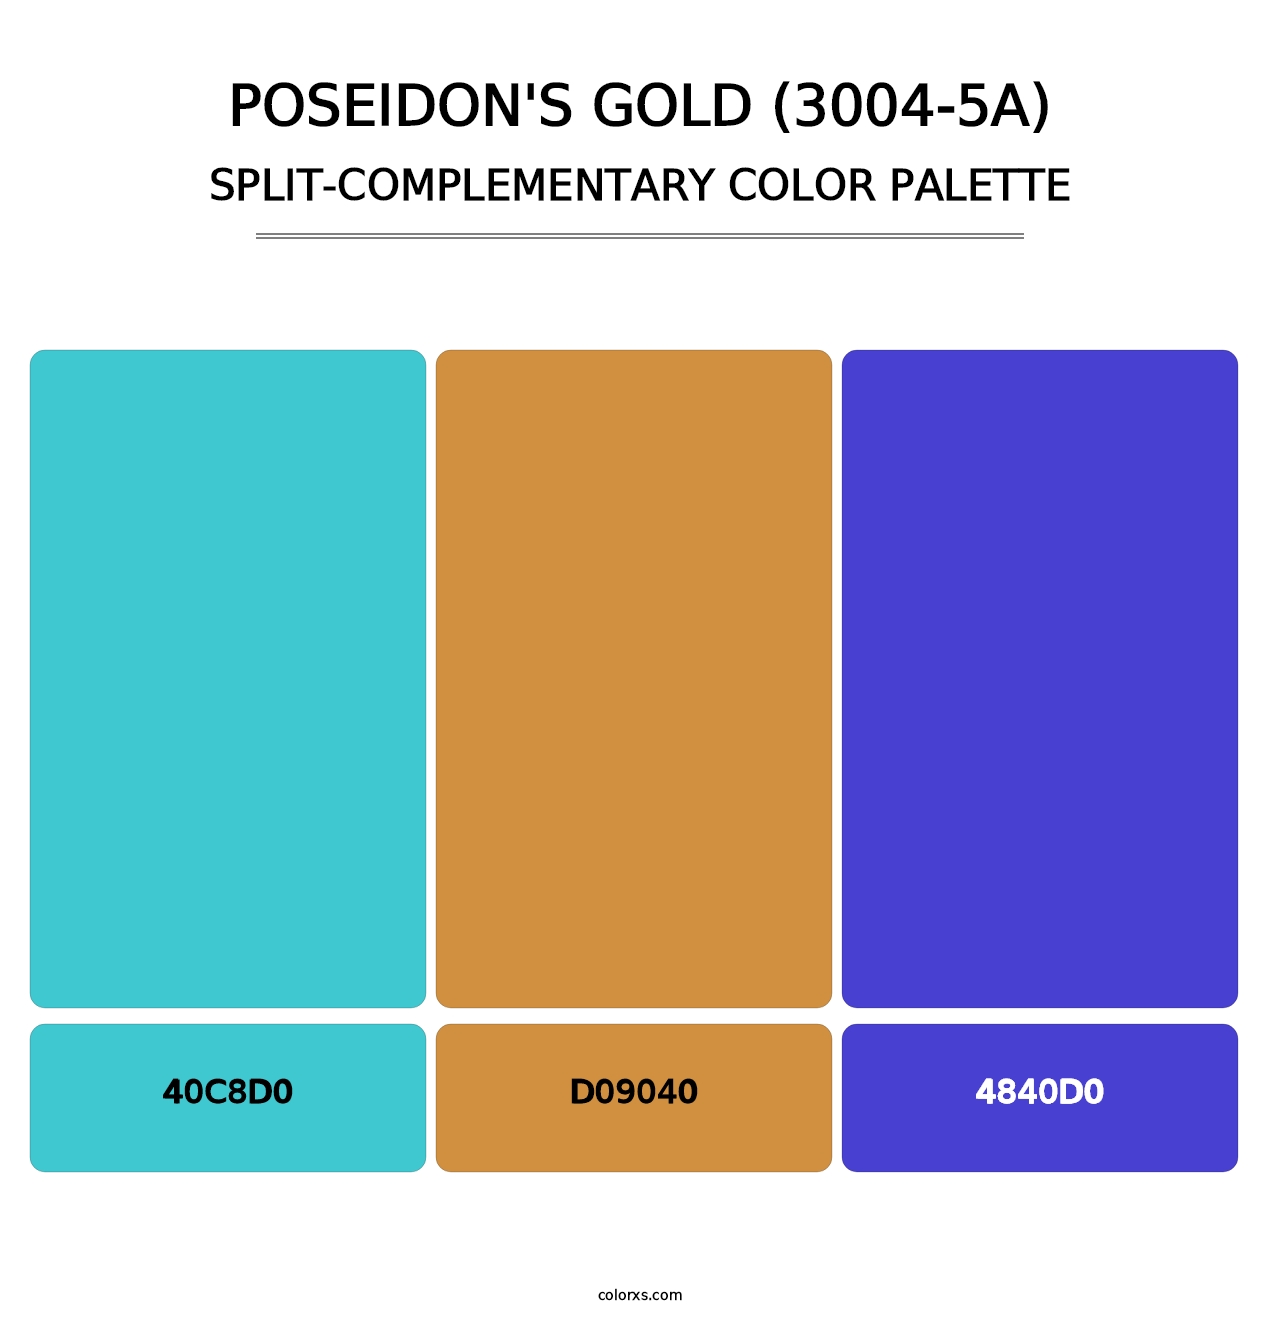 Poseidon's Gold (3004-5A) - Split-Complementary Color Palette